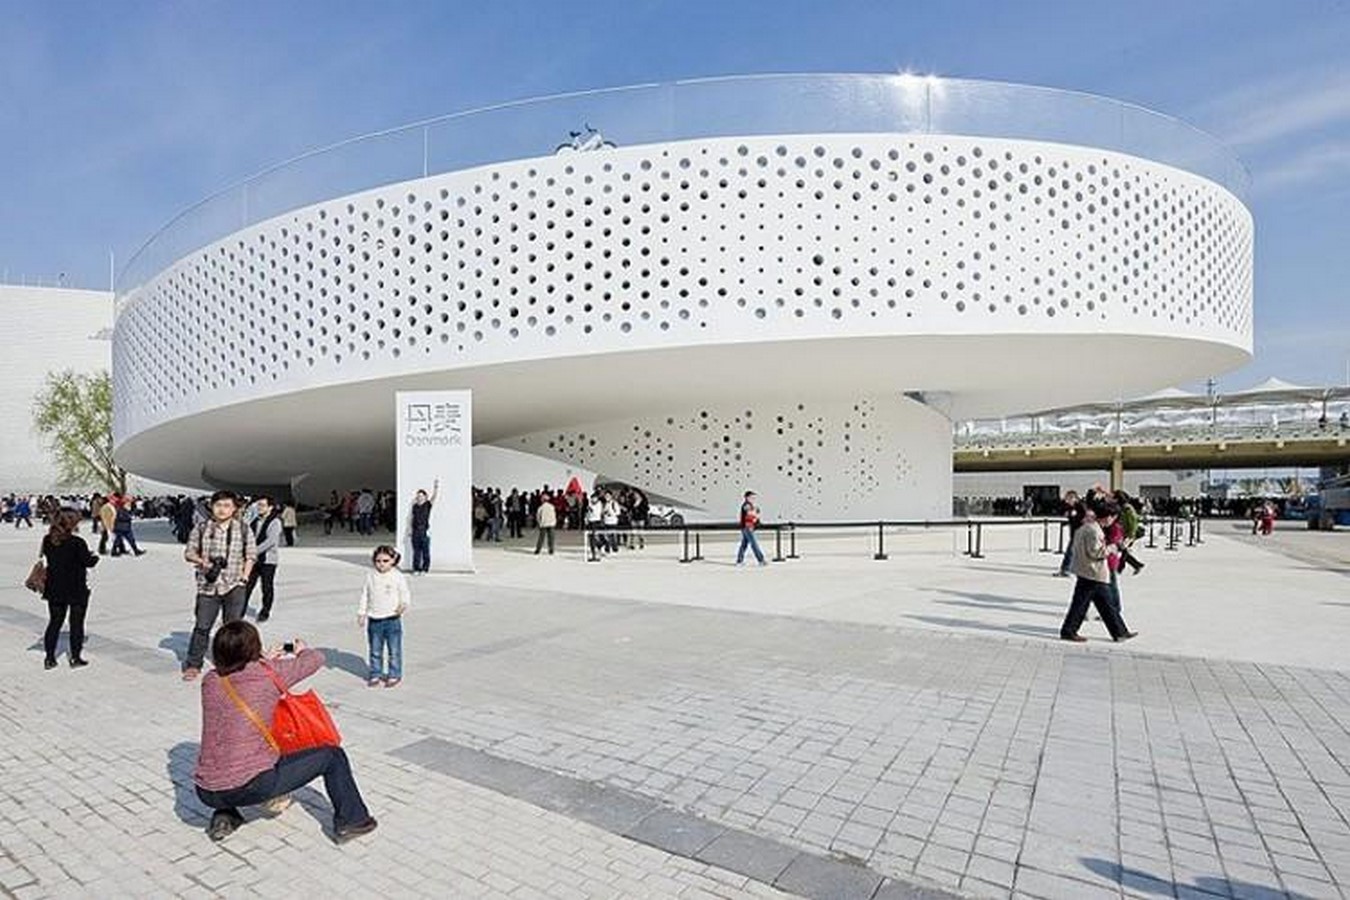 Denmark Pavilion for Shanghai Expo 2010 by BIG: An Architectural Fairytale - Sheet1